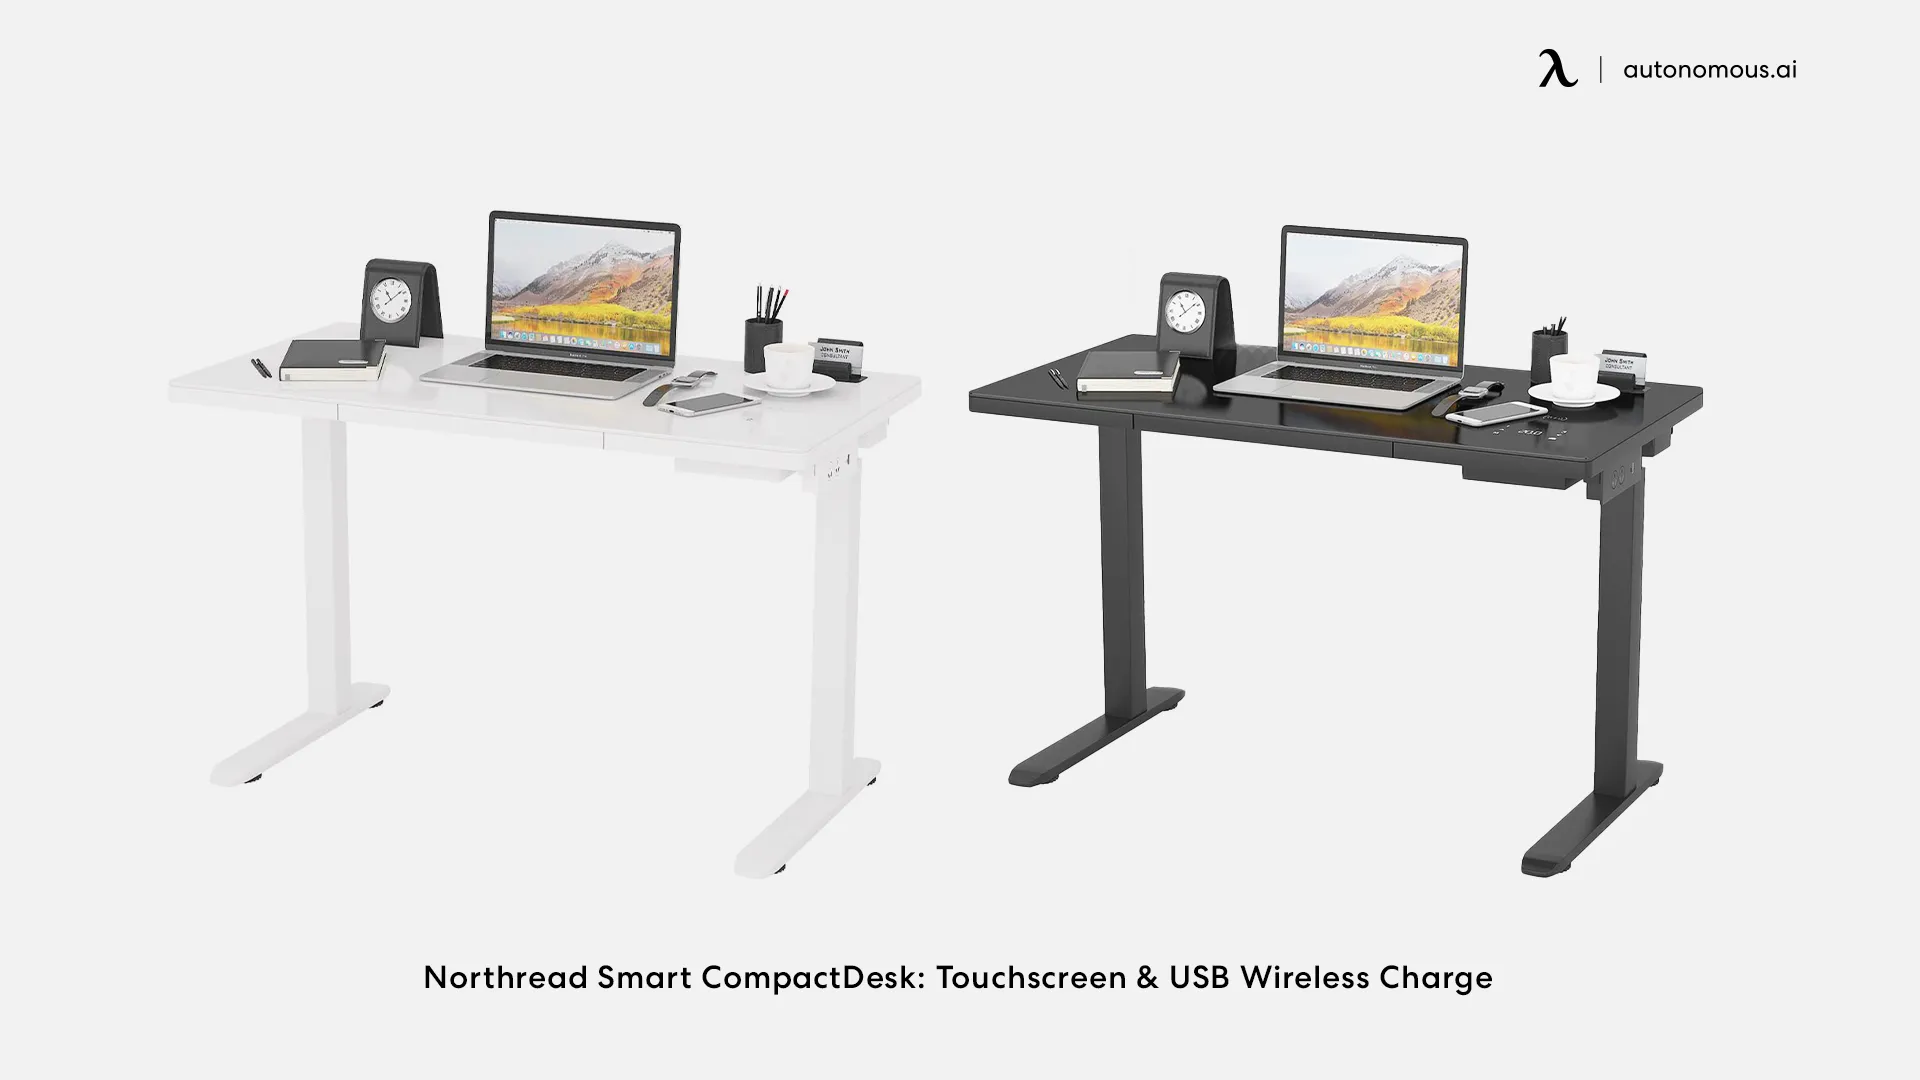 Northread Smart CompactDesk: Touchscreen & USB Wireless Charger